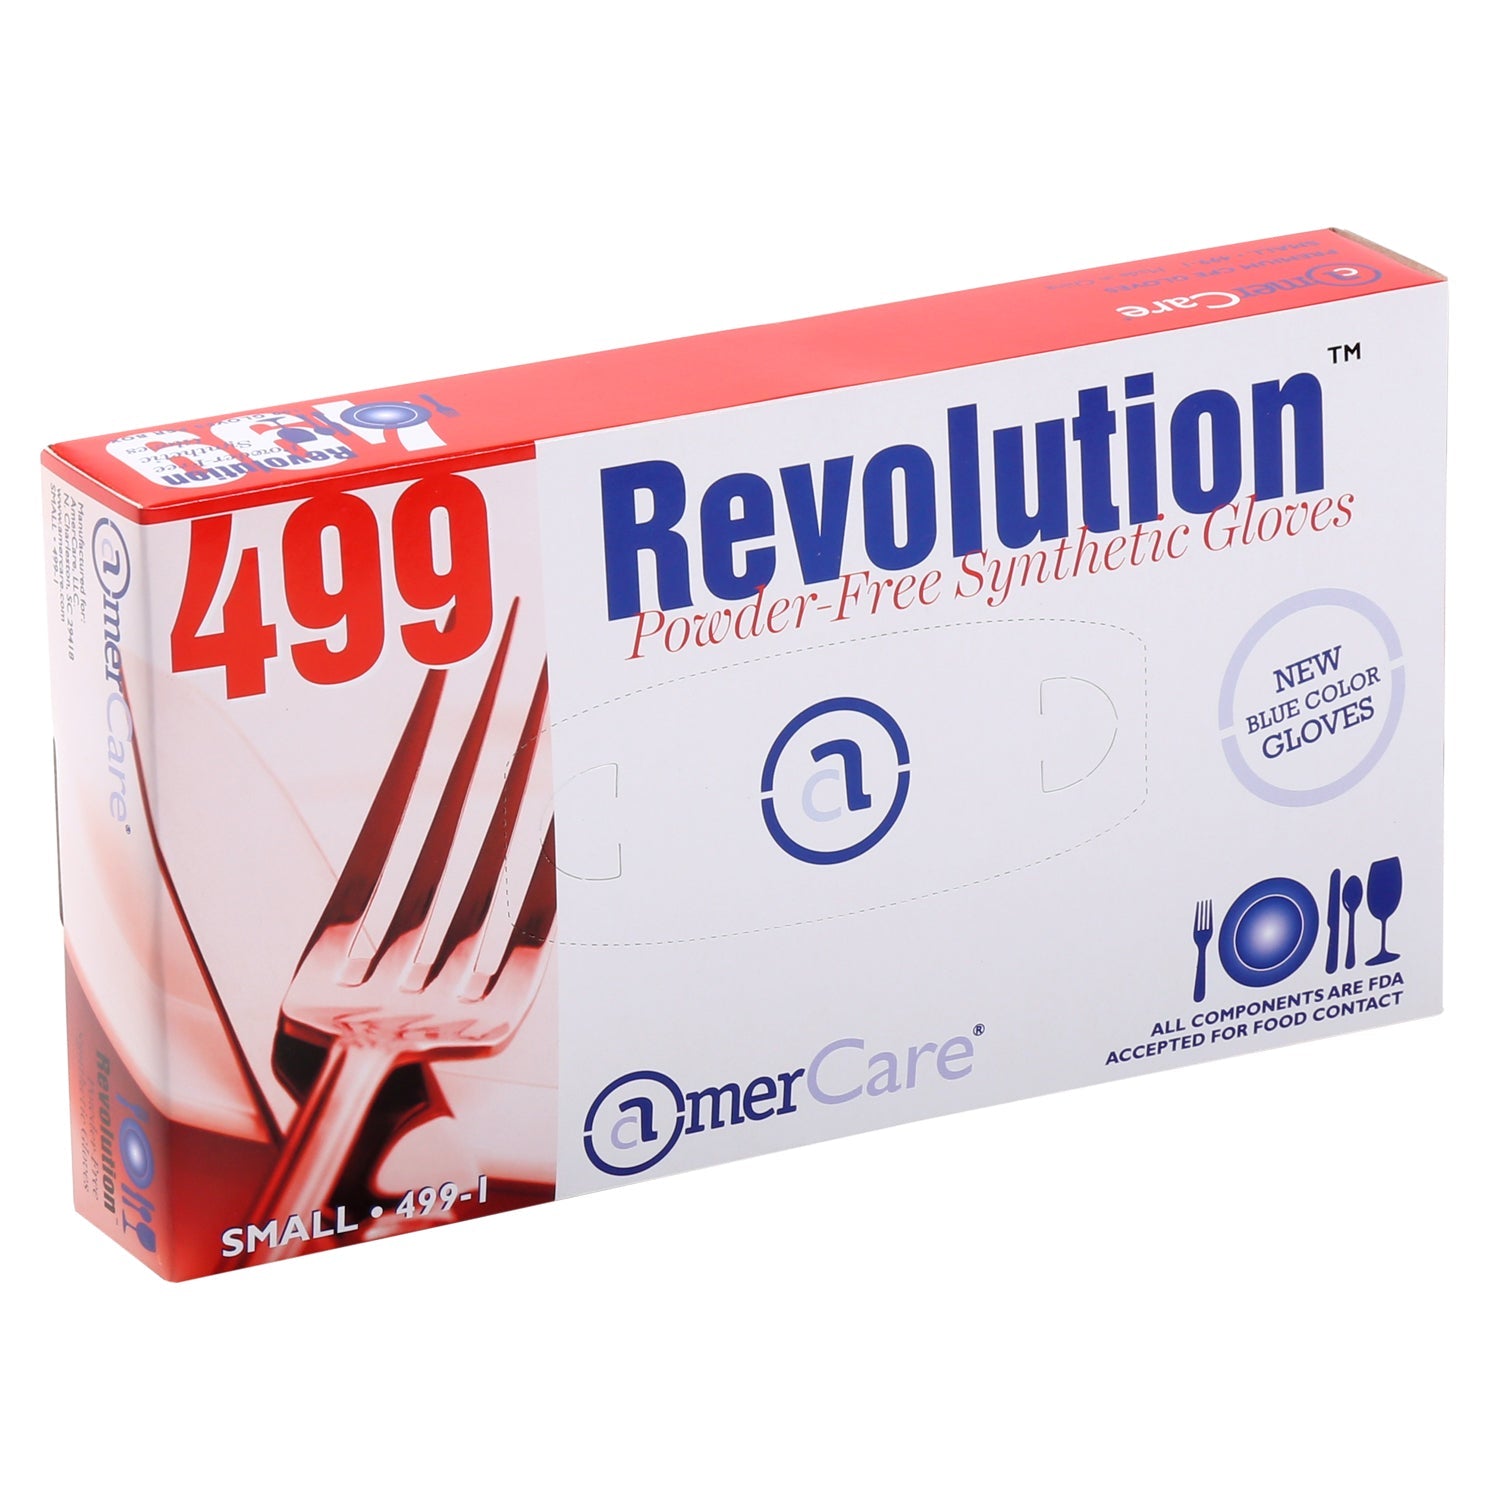 Revolution Powder Free Food Service Gloves, Case of 1,000